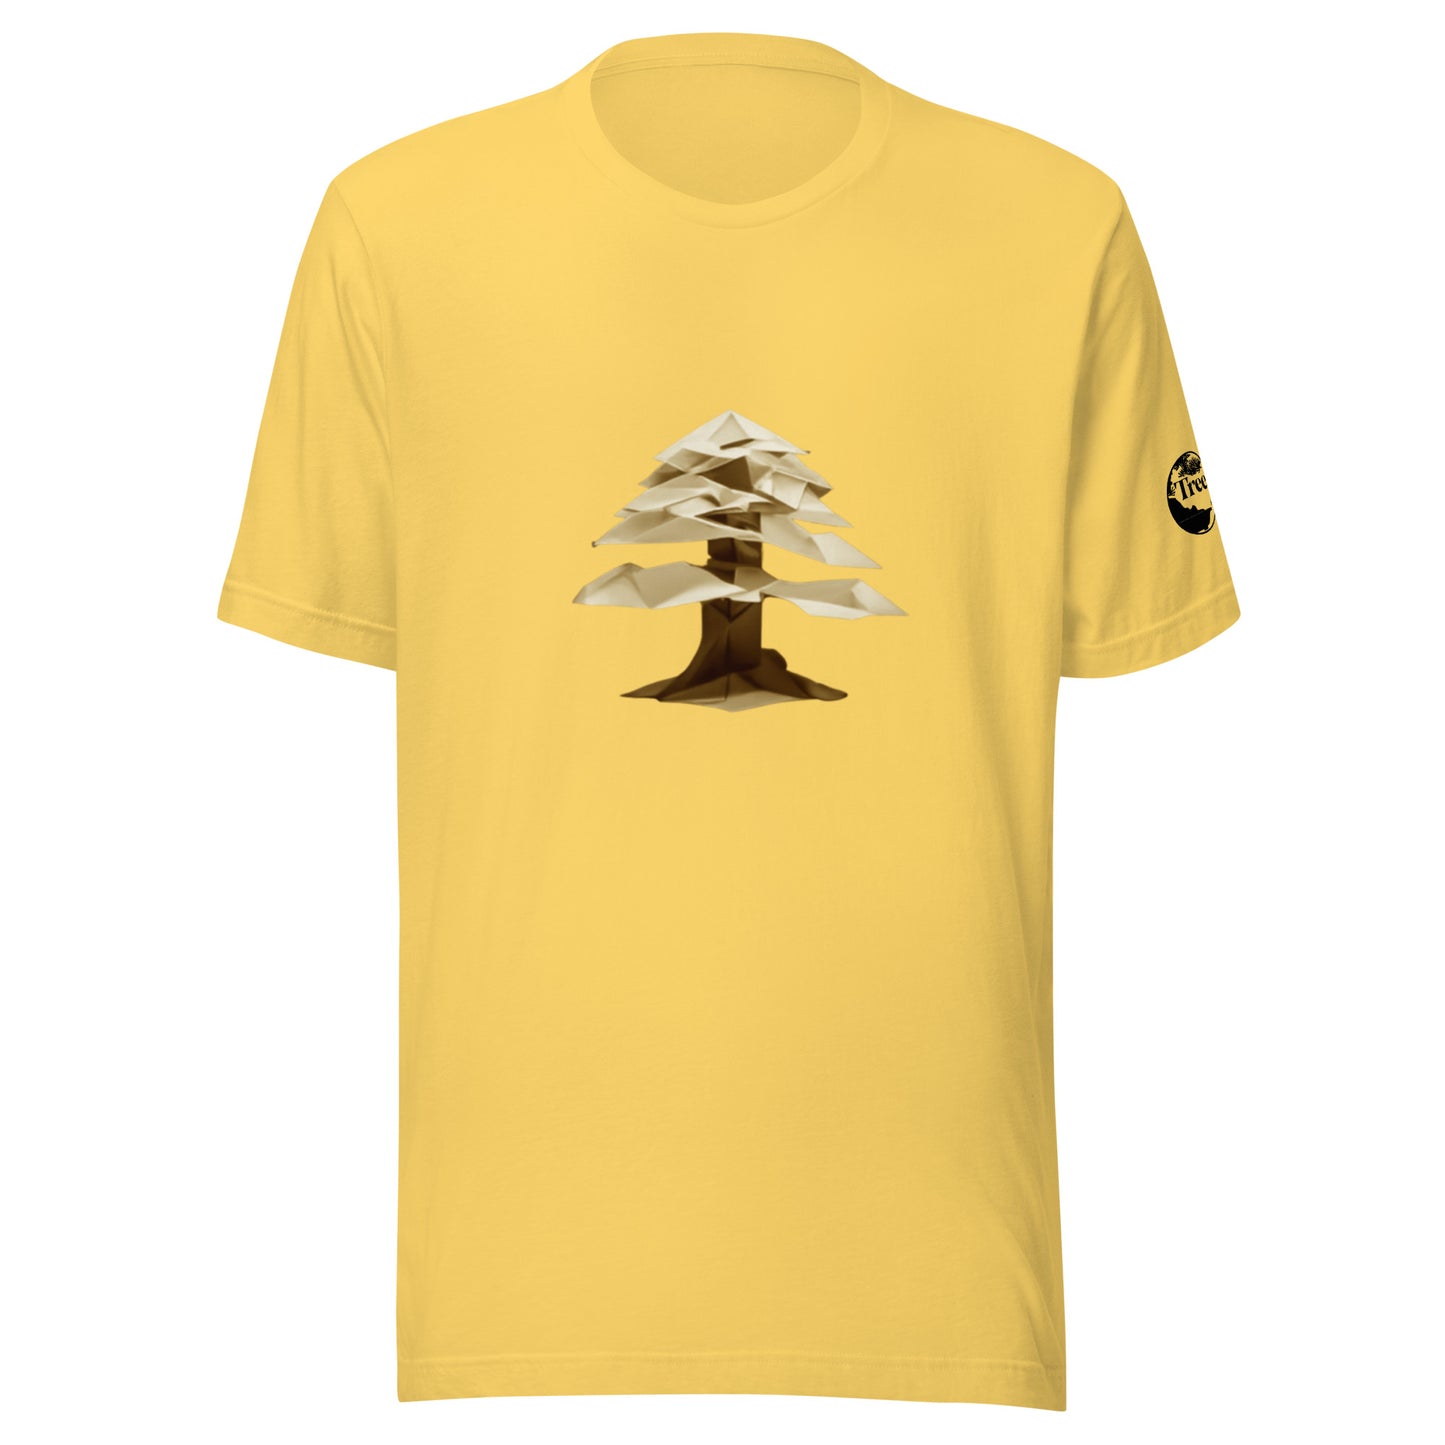 Treeigami Origami Tree-Shirt Unisex t-shirt